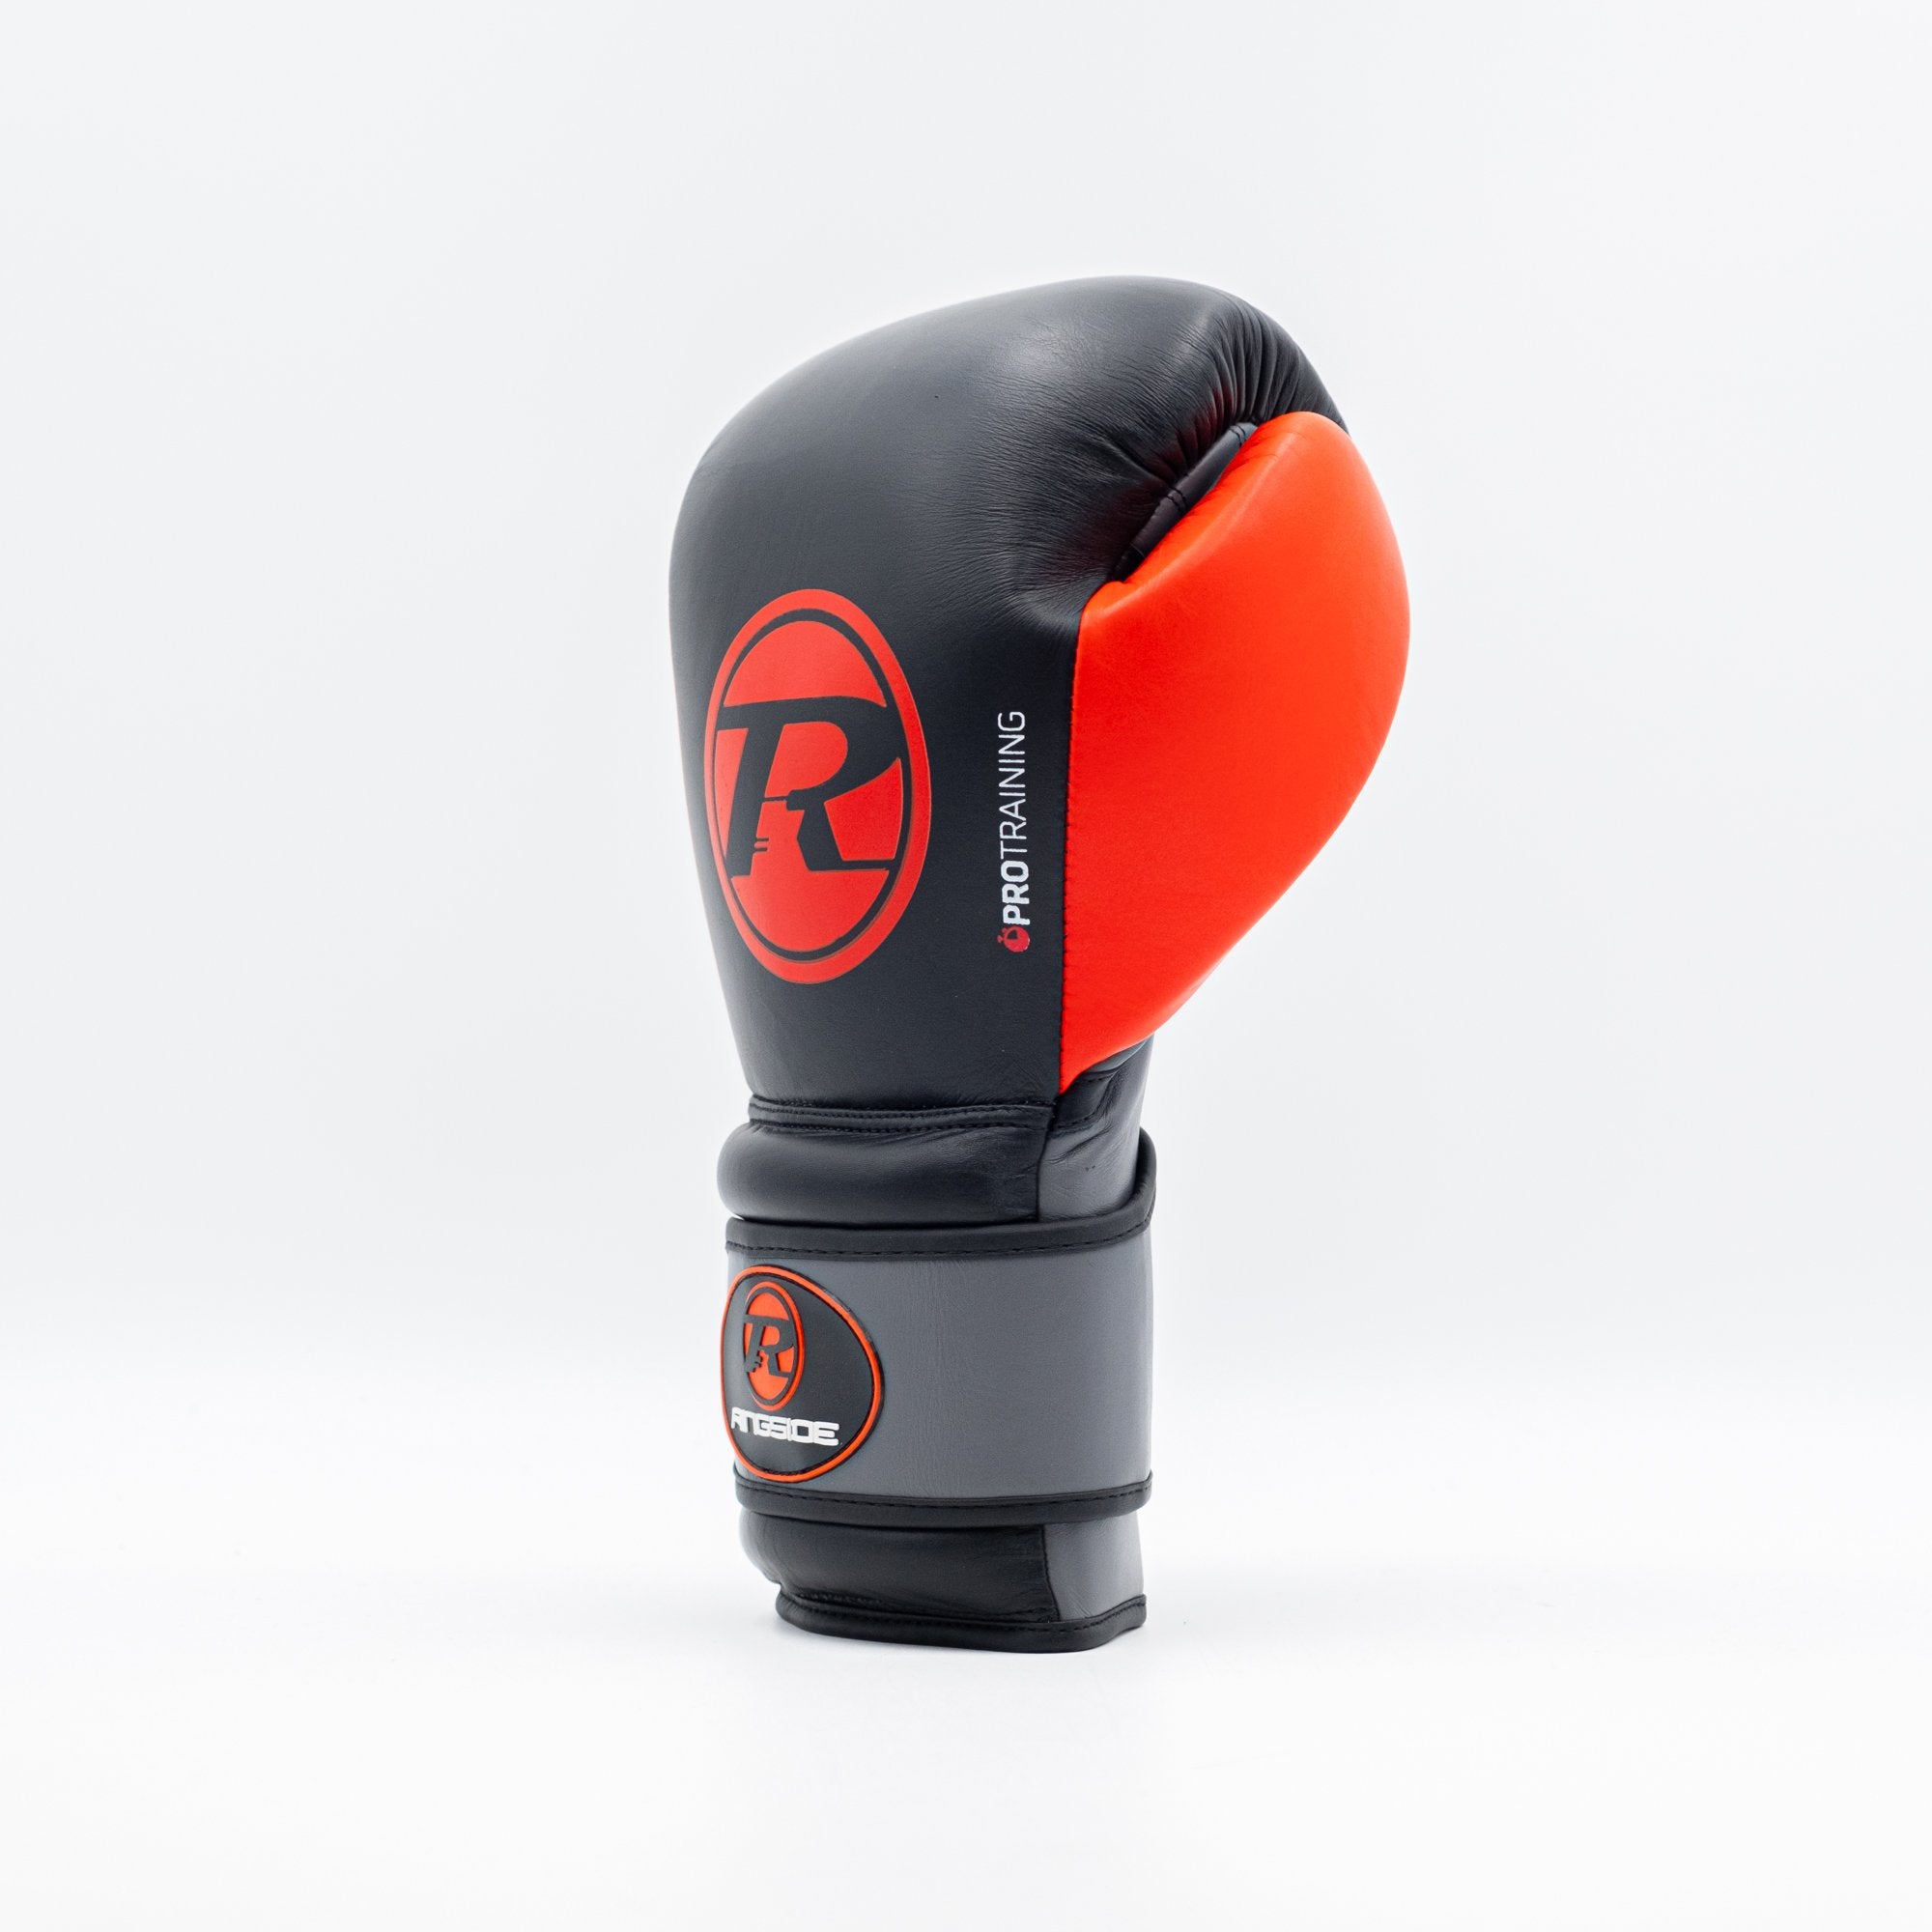 Pro Training G2 Strap Boxing Glove Black / Red / Slate